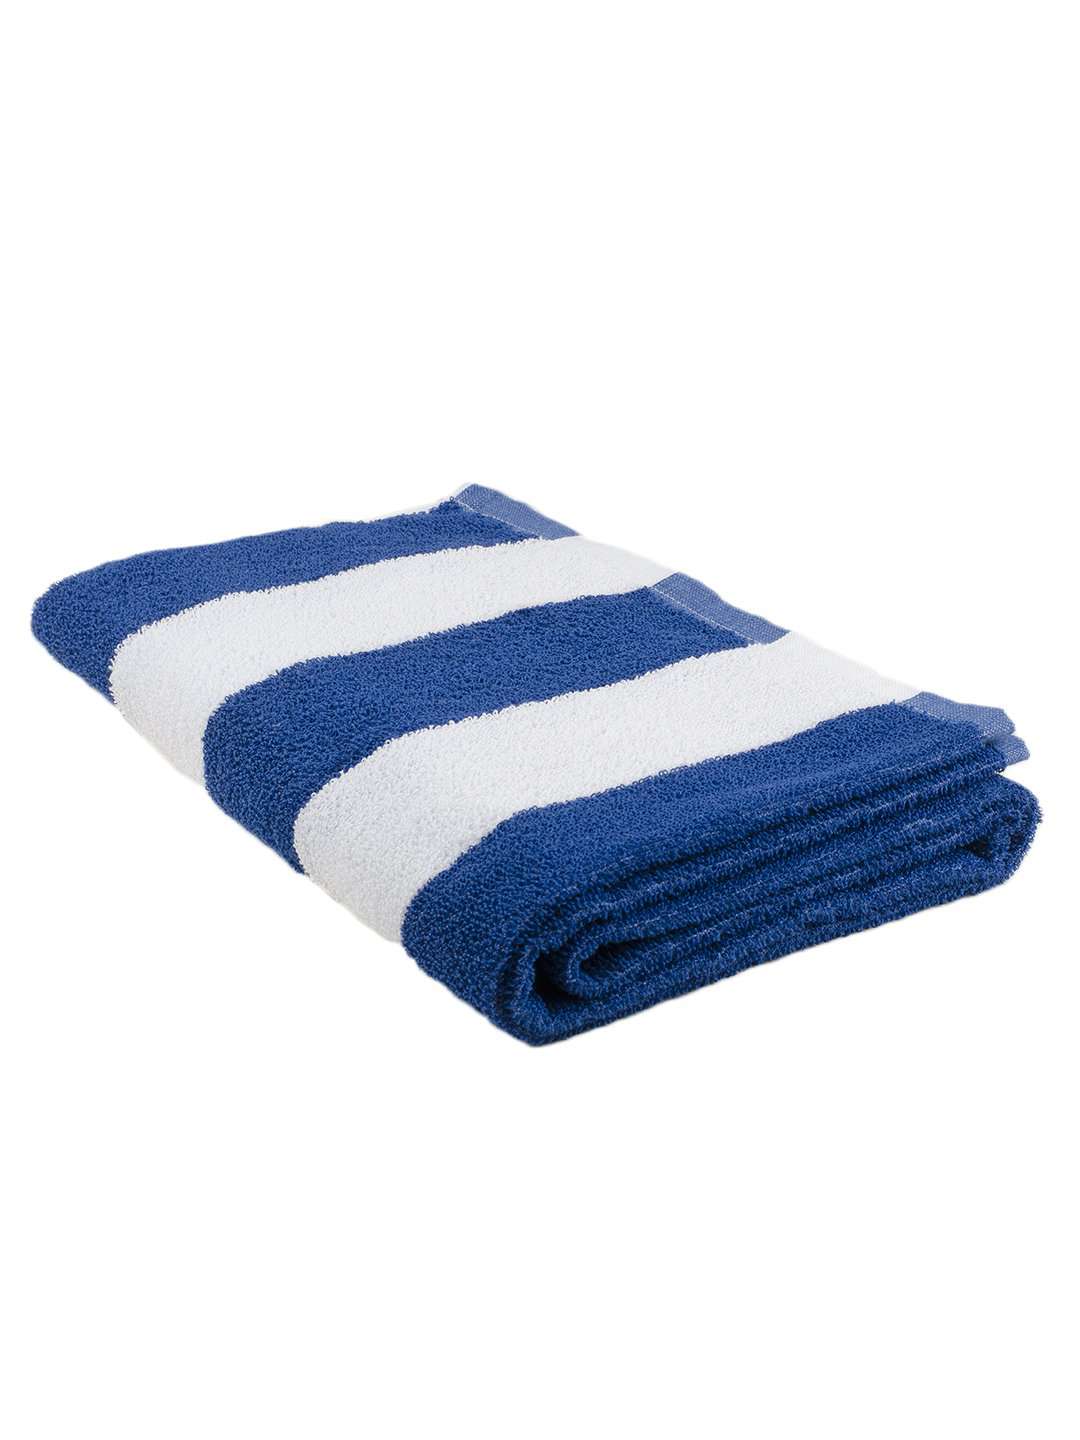 Turkish Bath Premium Cotton Stripe Bath and Pool Towel : Blue - SWHF